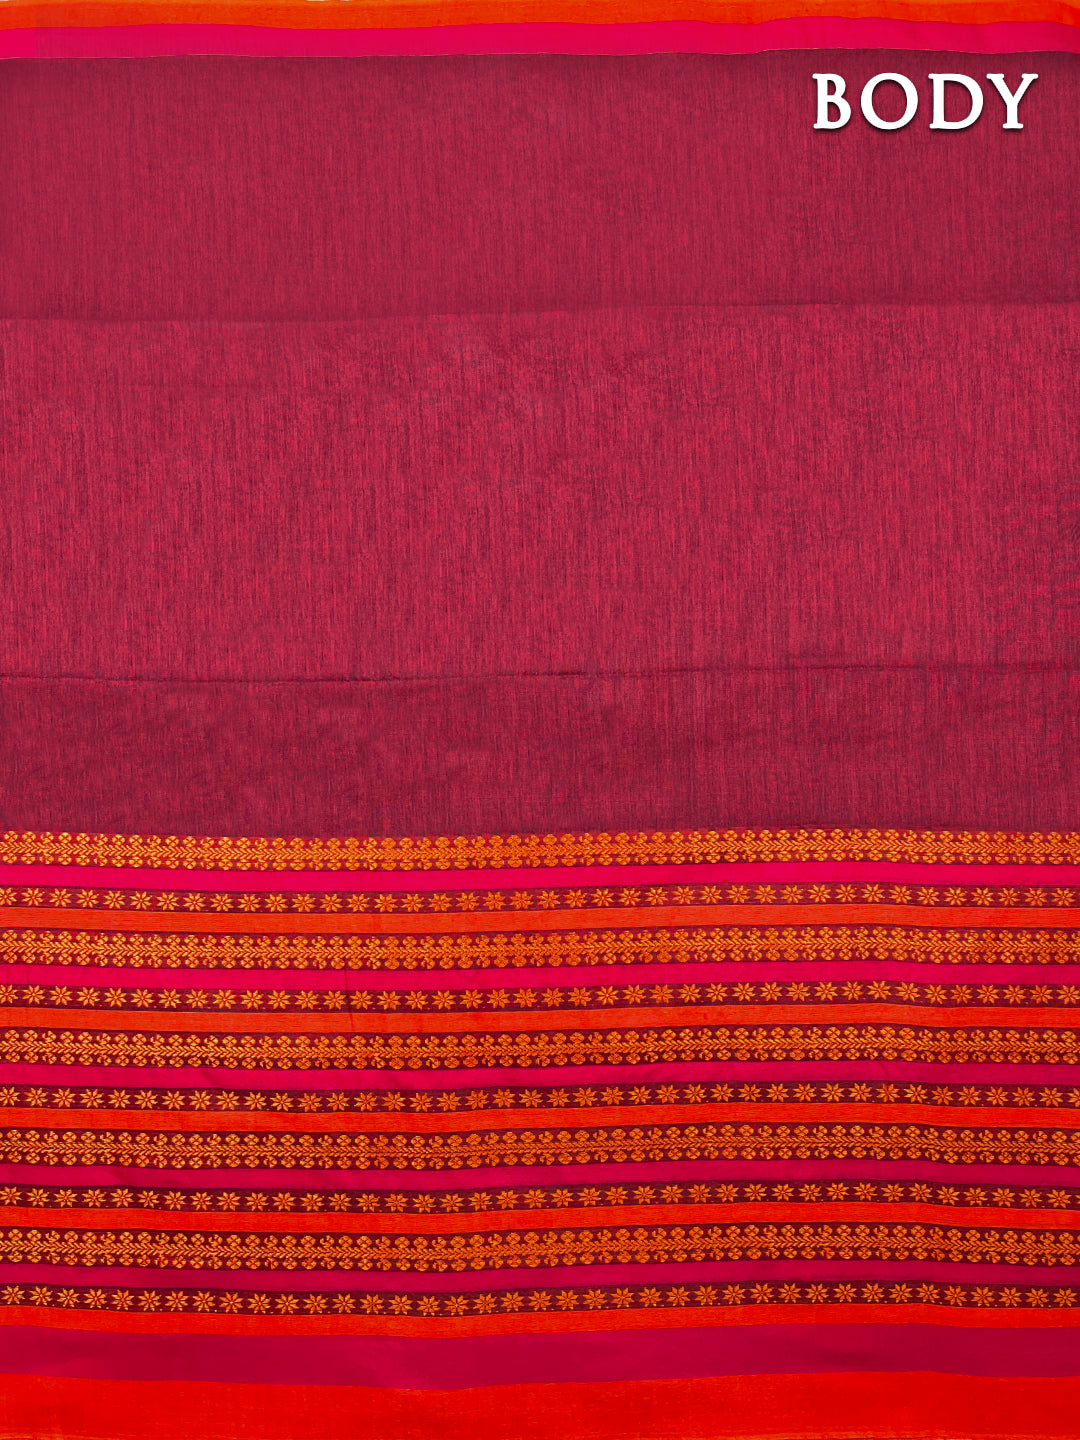 Maroon and orange begumpuri cotton saree